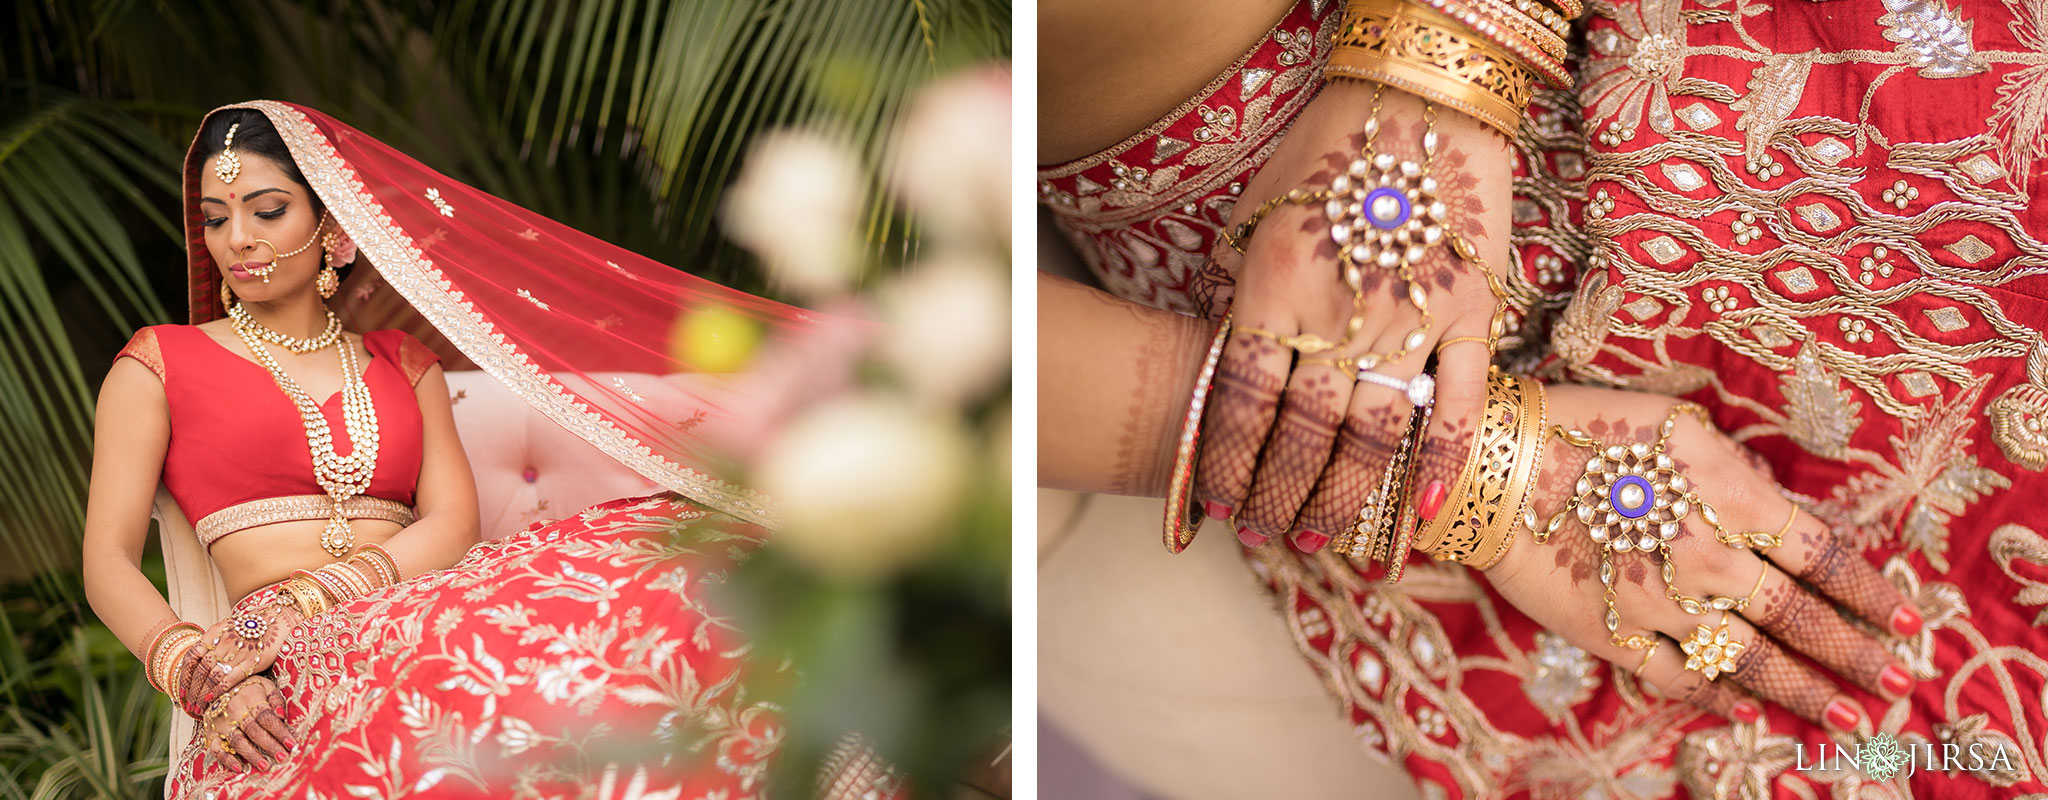 07 ritz carlton laguna niguel indian bride wedding photography